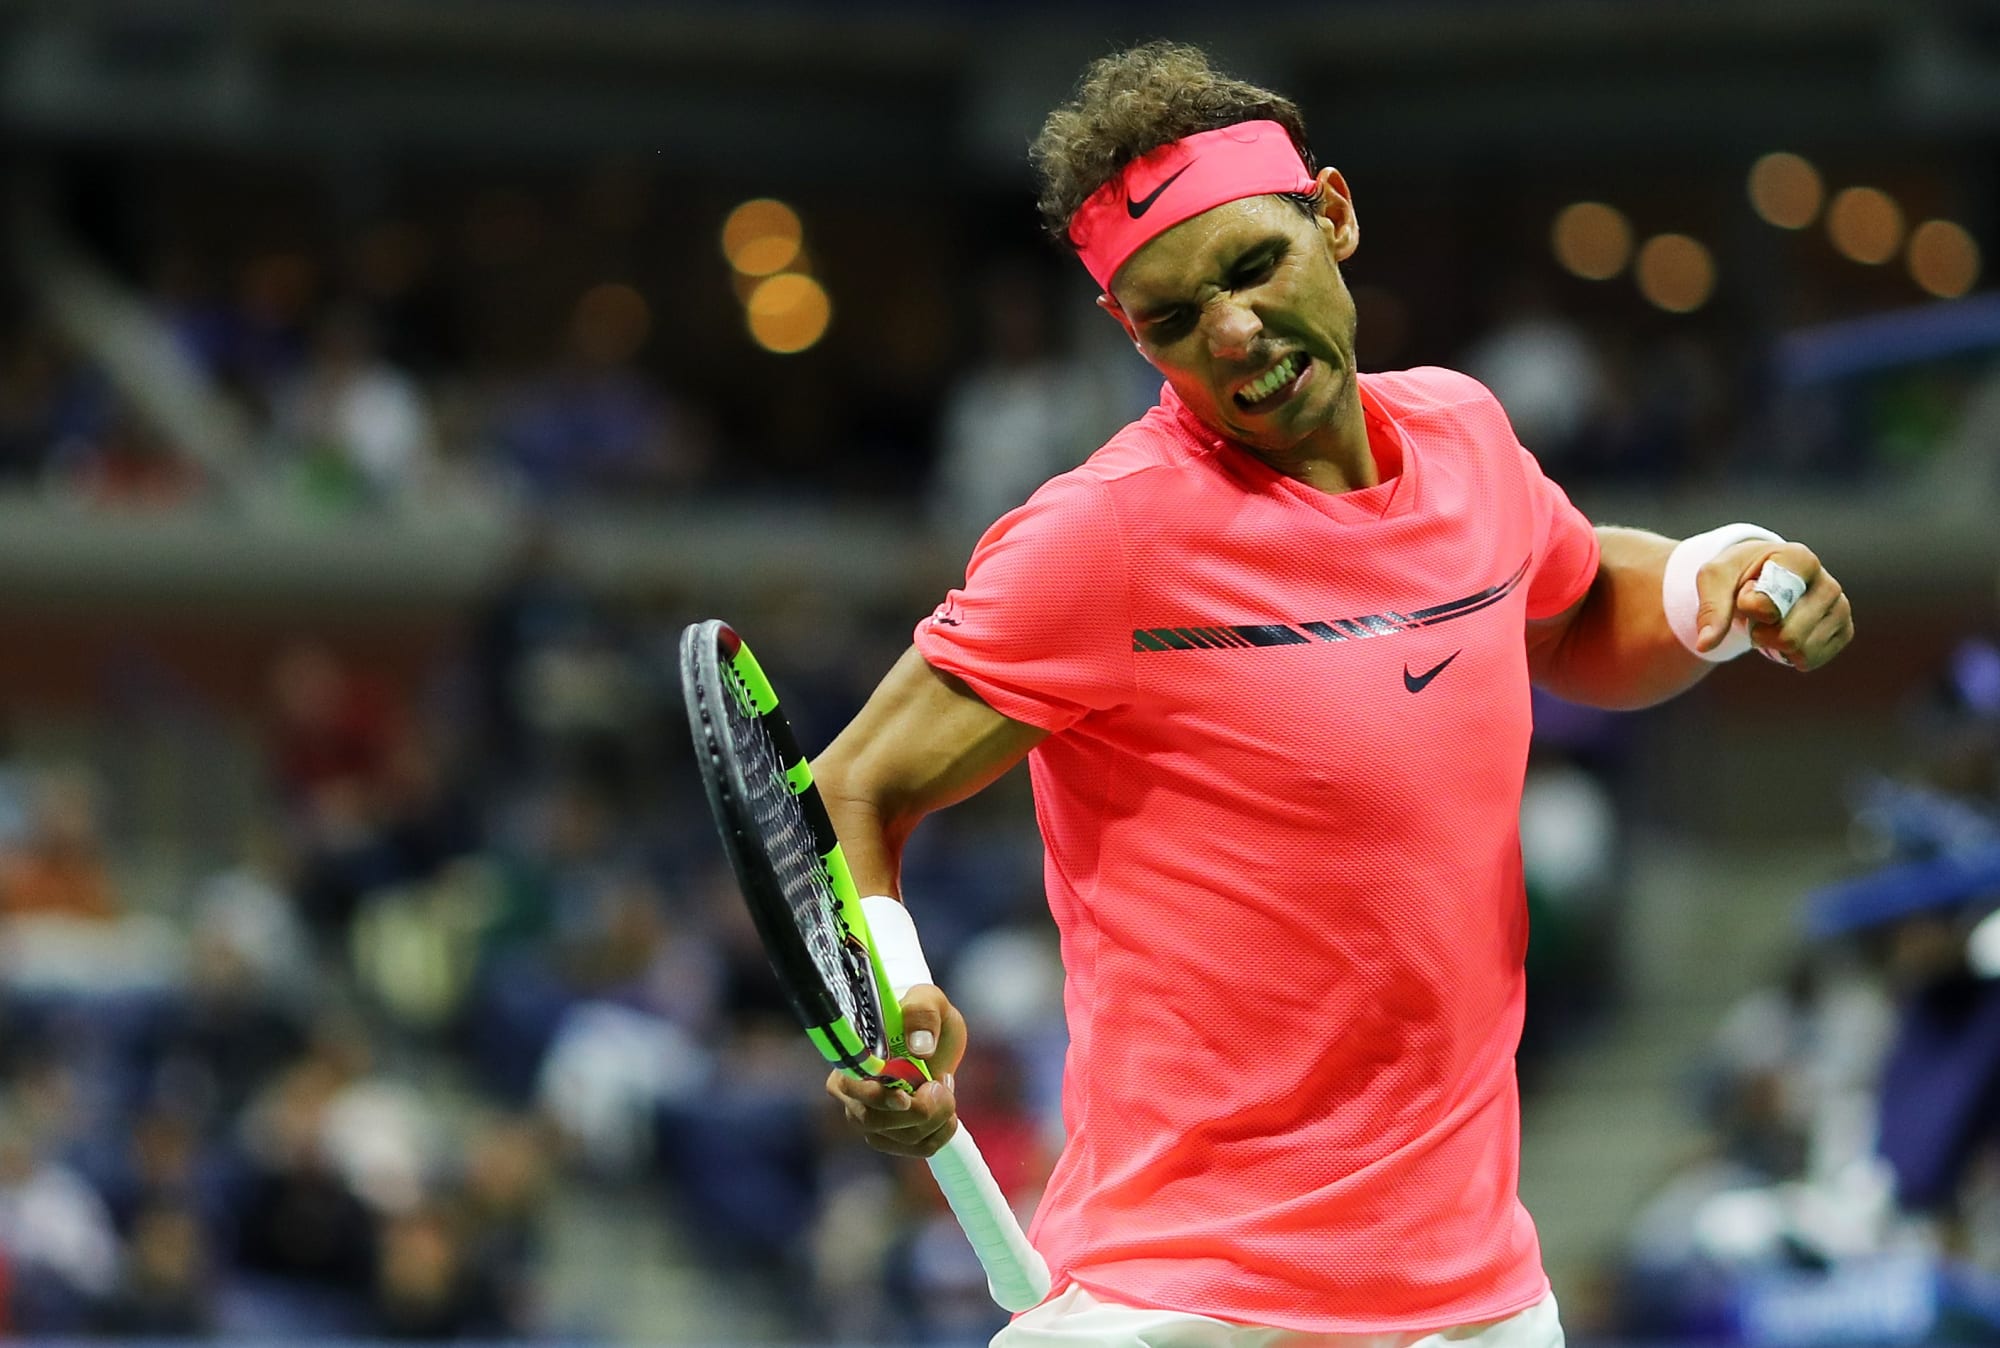 US Open 2017: Rafael Nadal makes triumphant return to quarterfinals